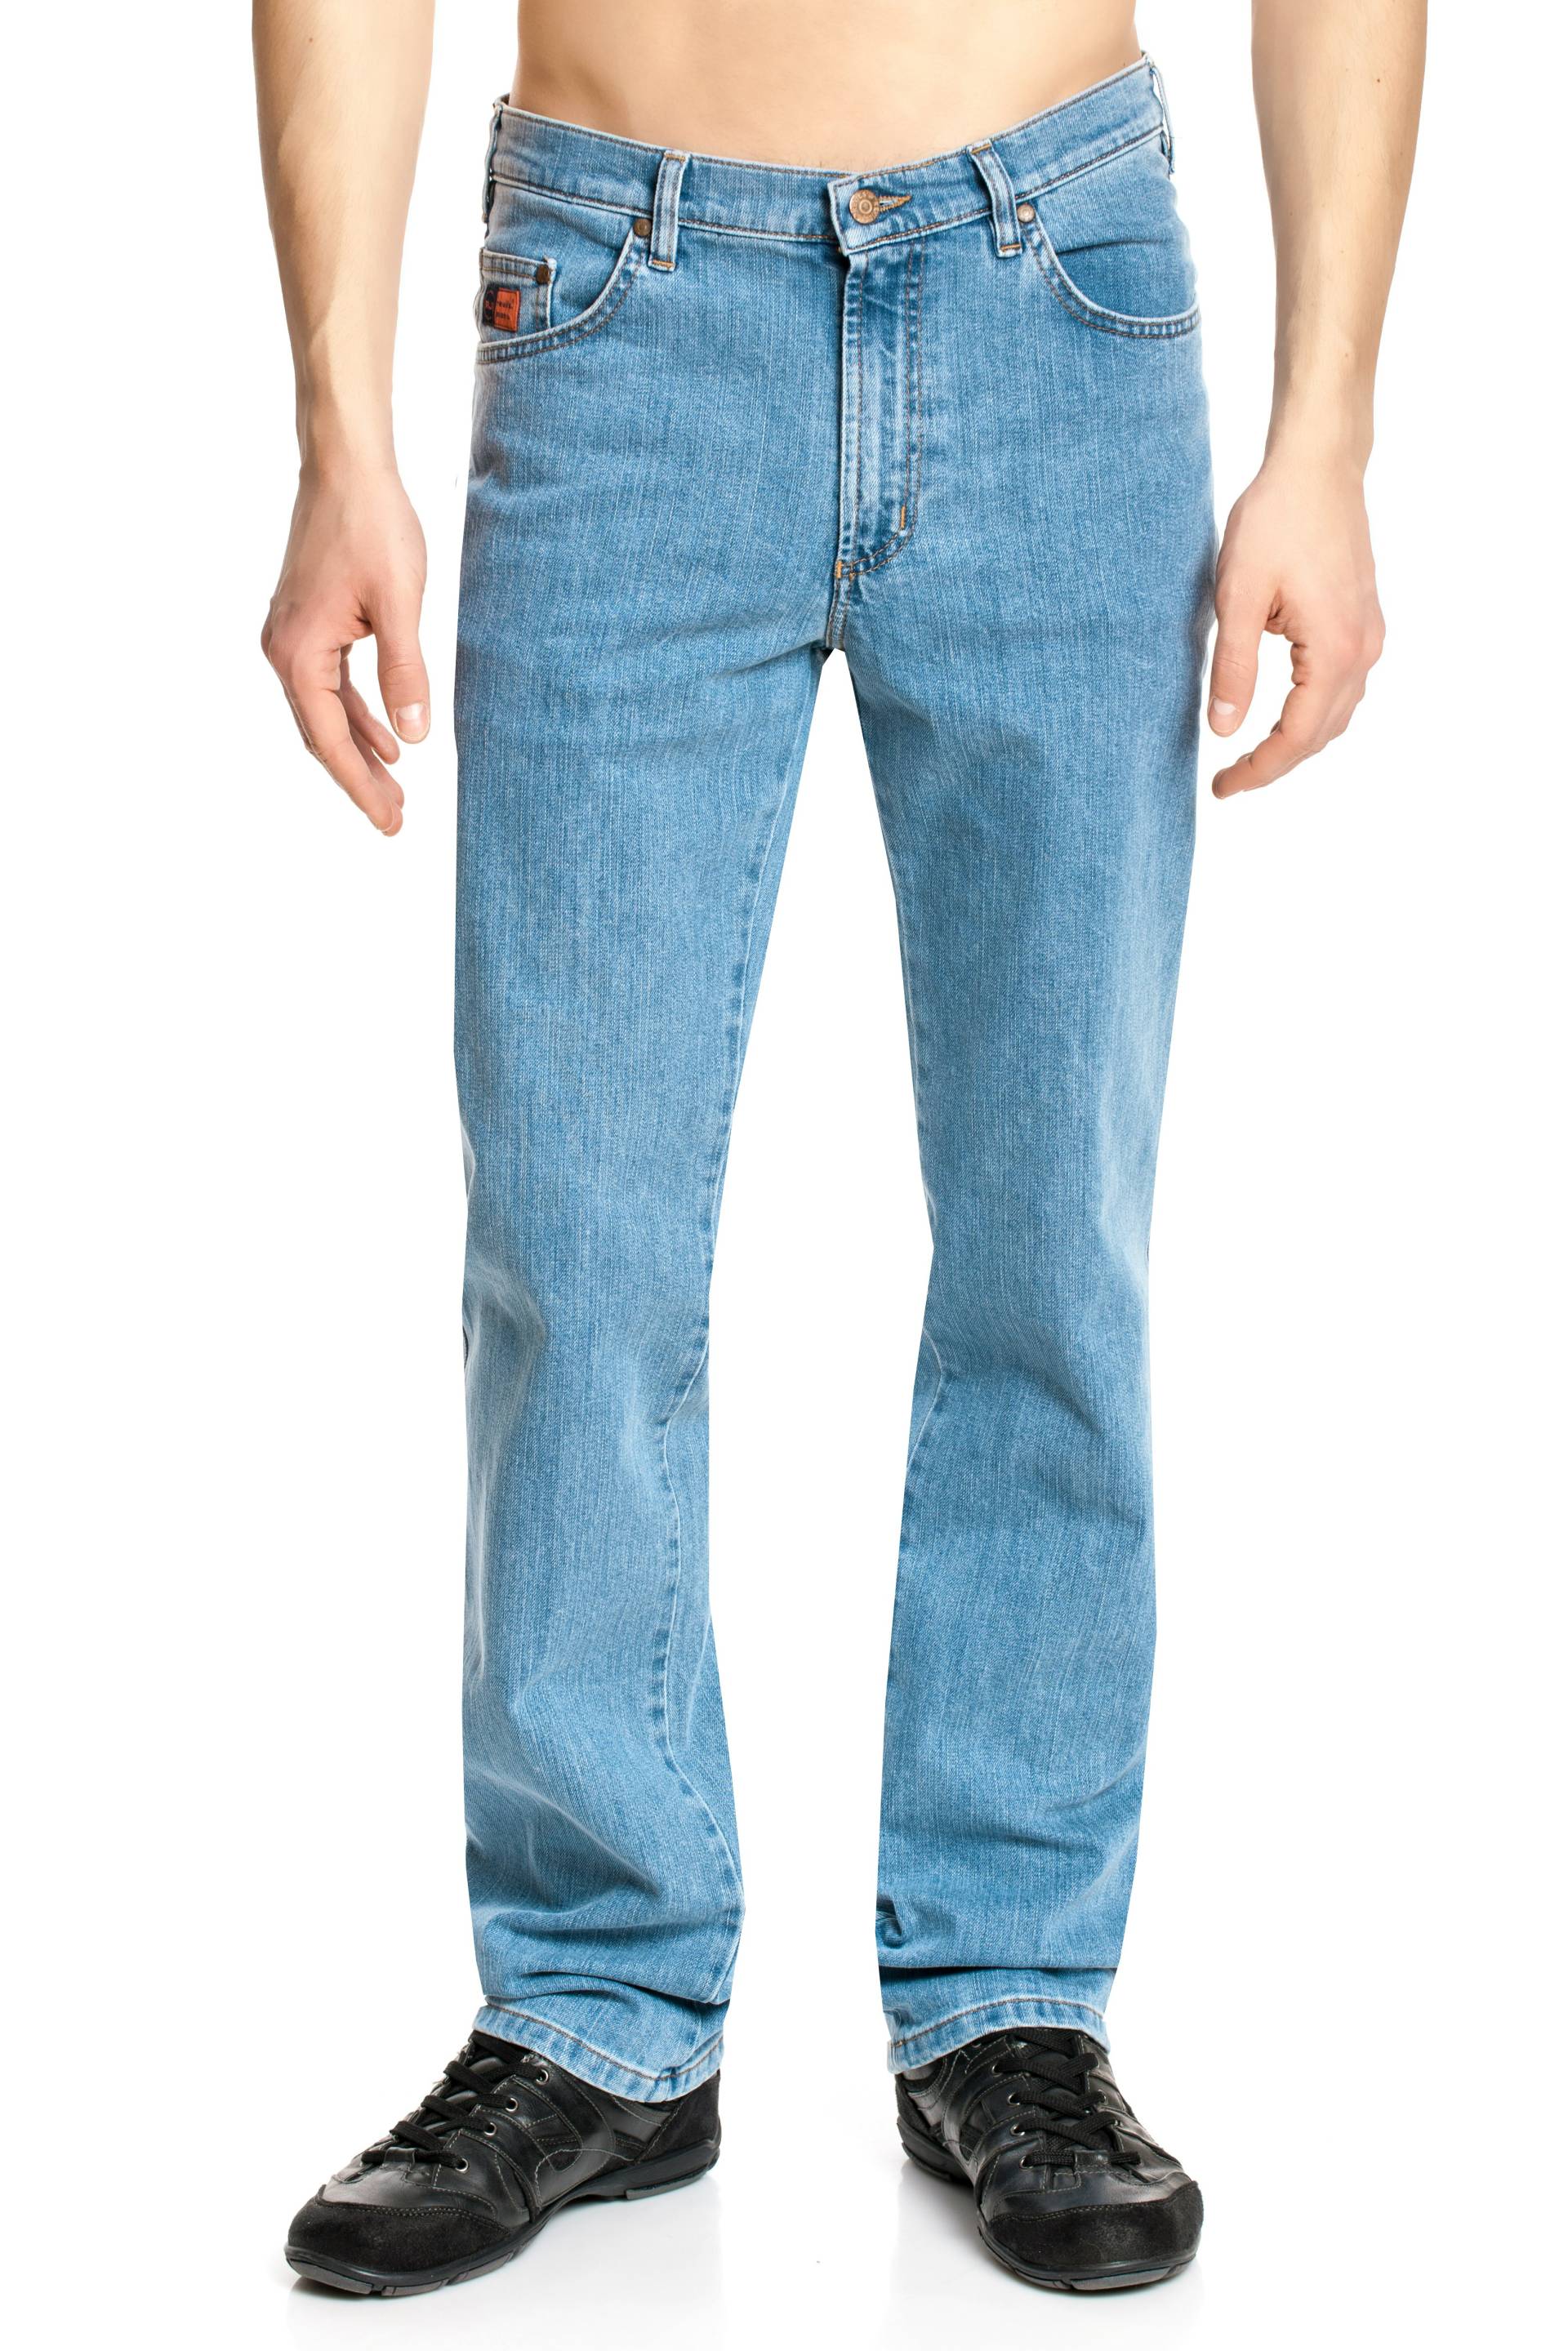 Revils 302 Five Pocket Classic Jeans bis Länge 38 von Revils